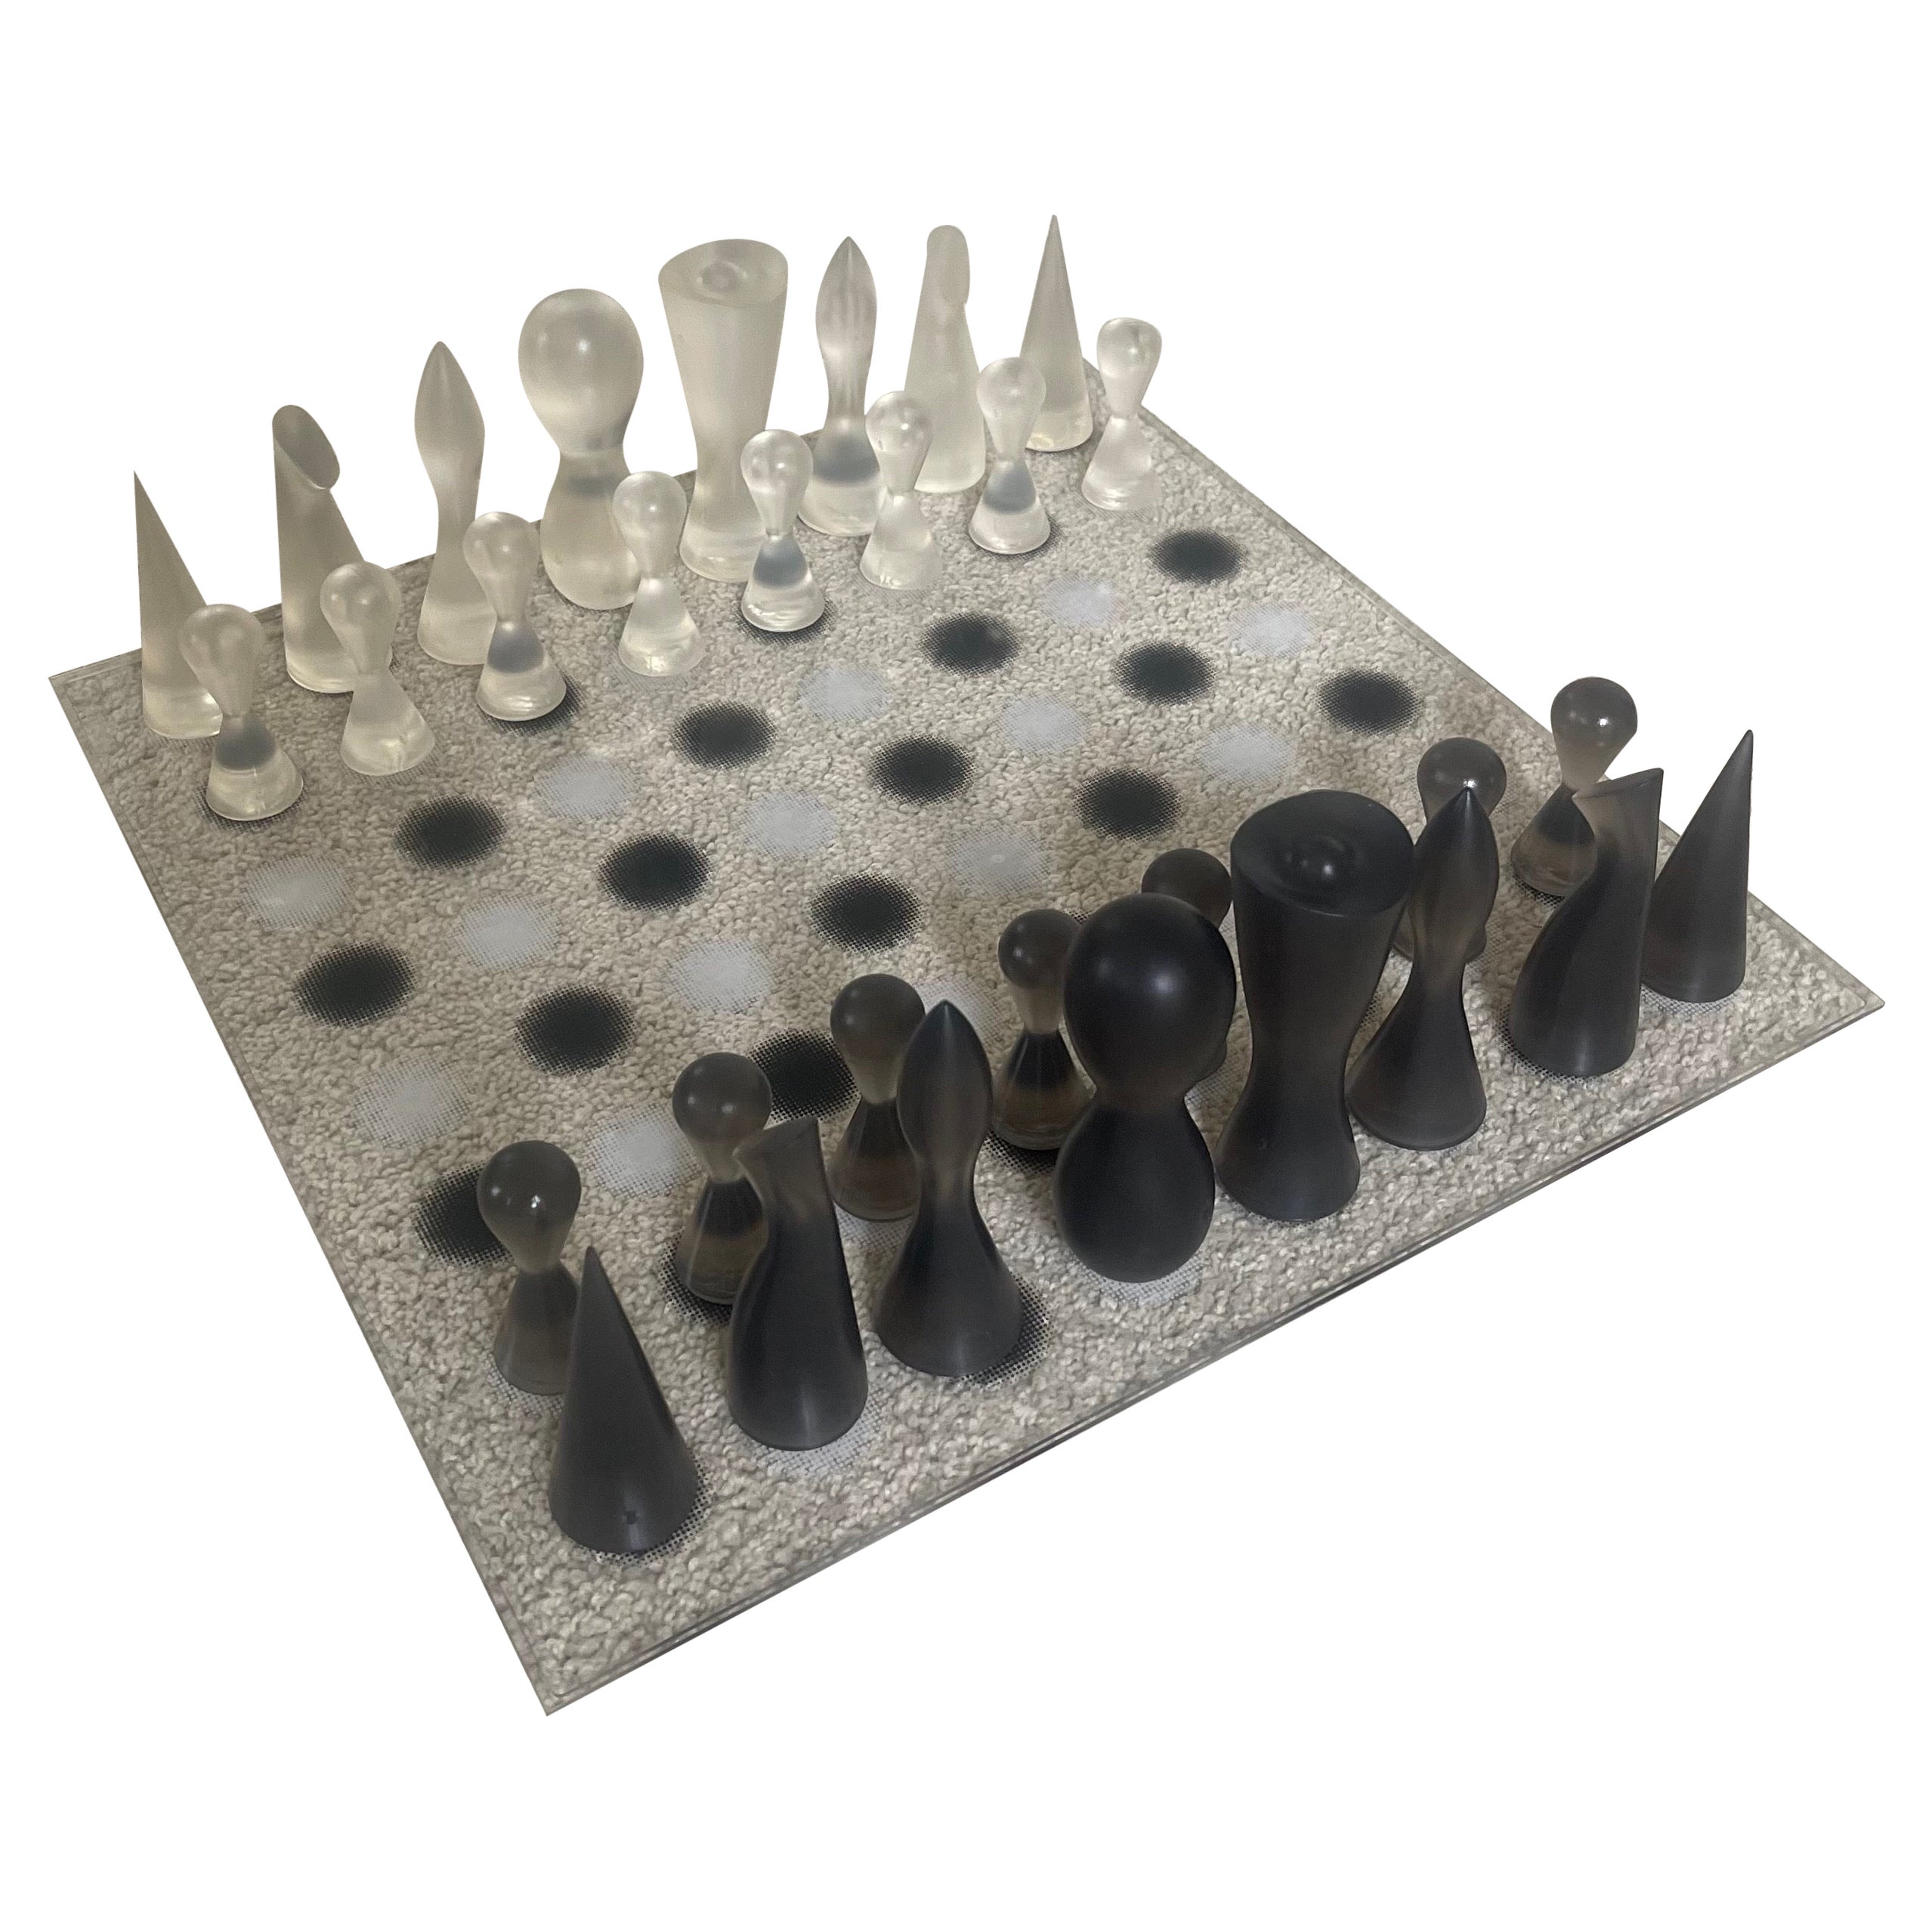 Acrylic & Rubber Modern Chess Set by Karim Rashid